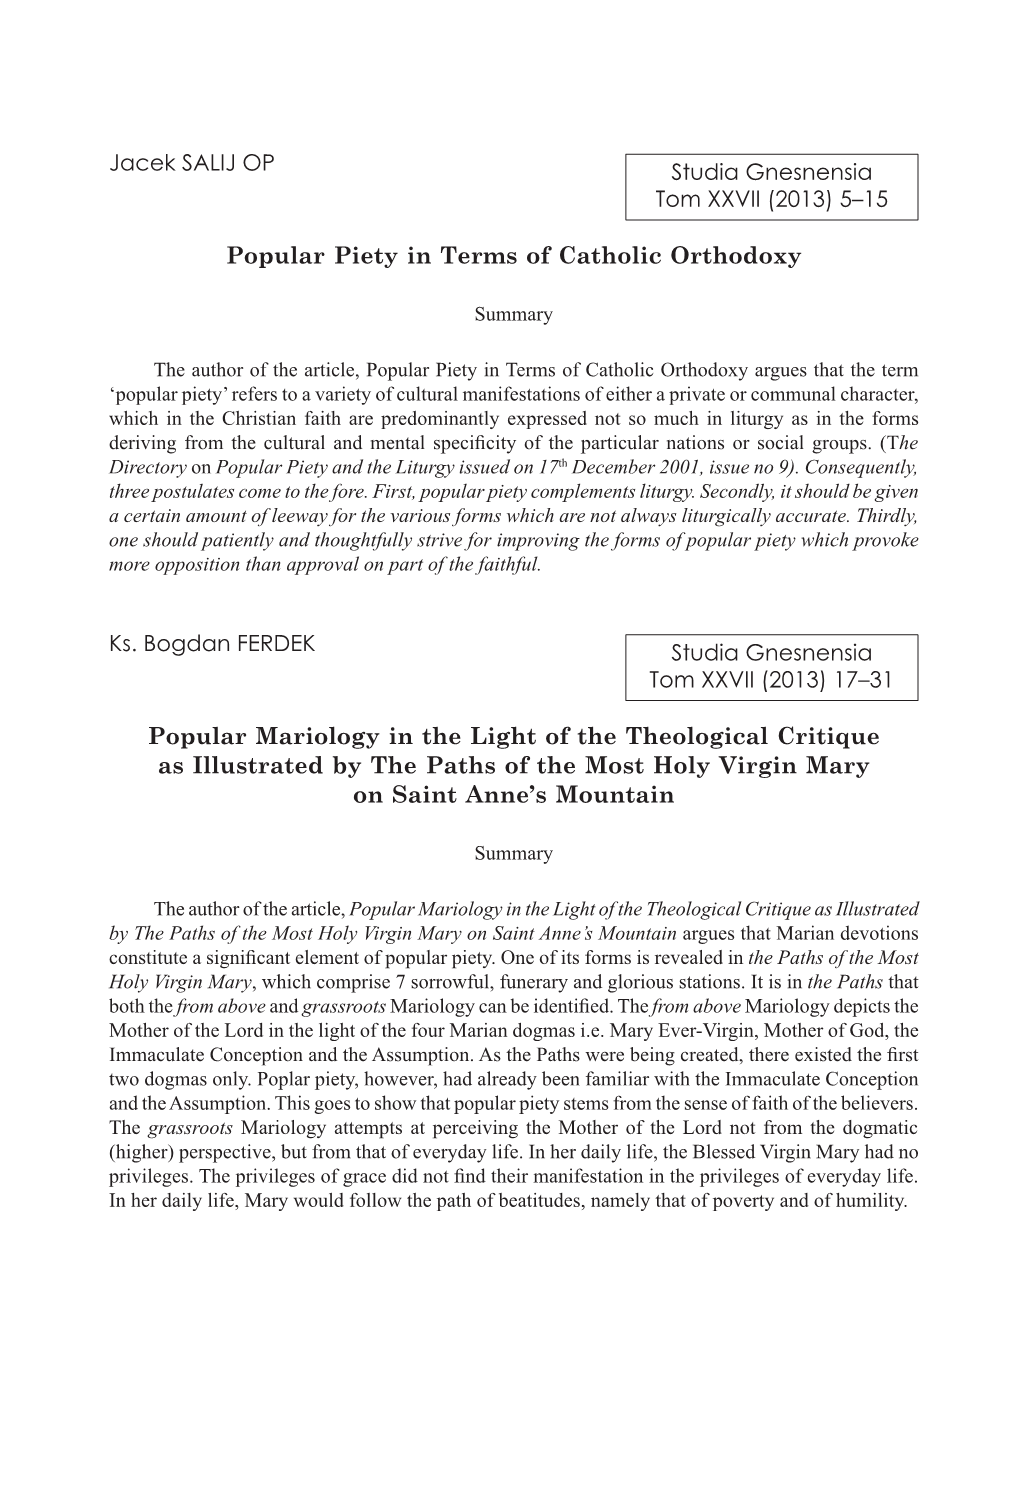 Jacek SALIJ OP Popular Piety in Terms of Catholic Orthodoxy Studia